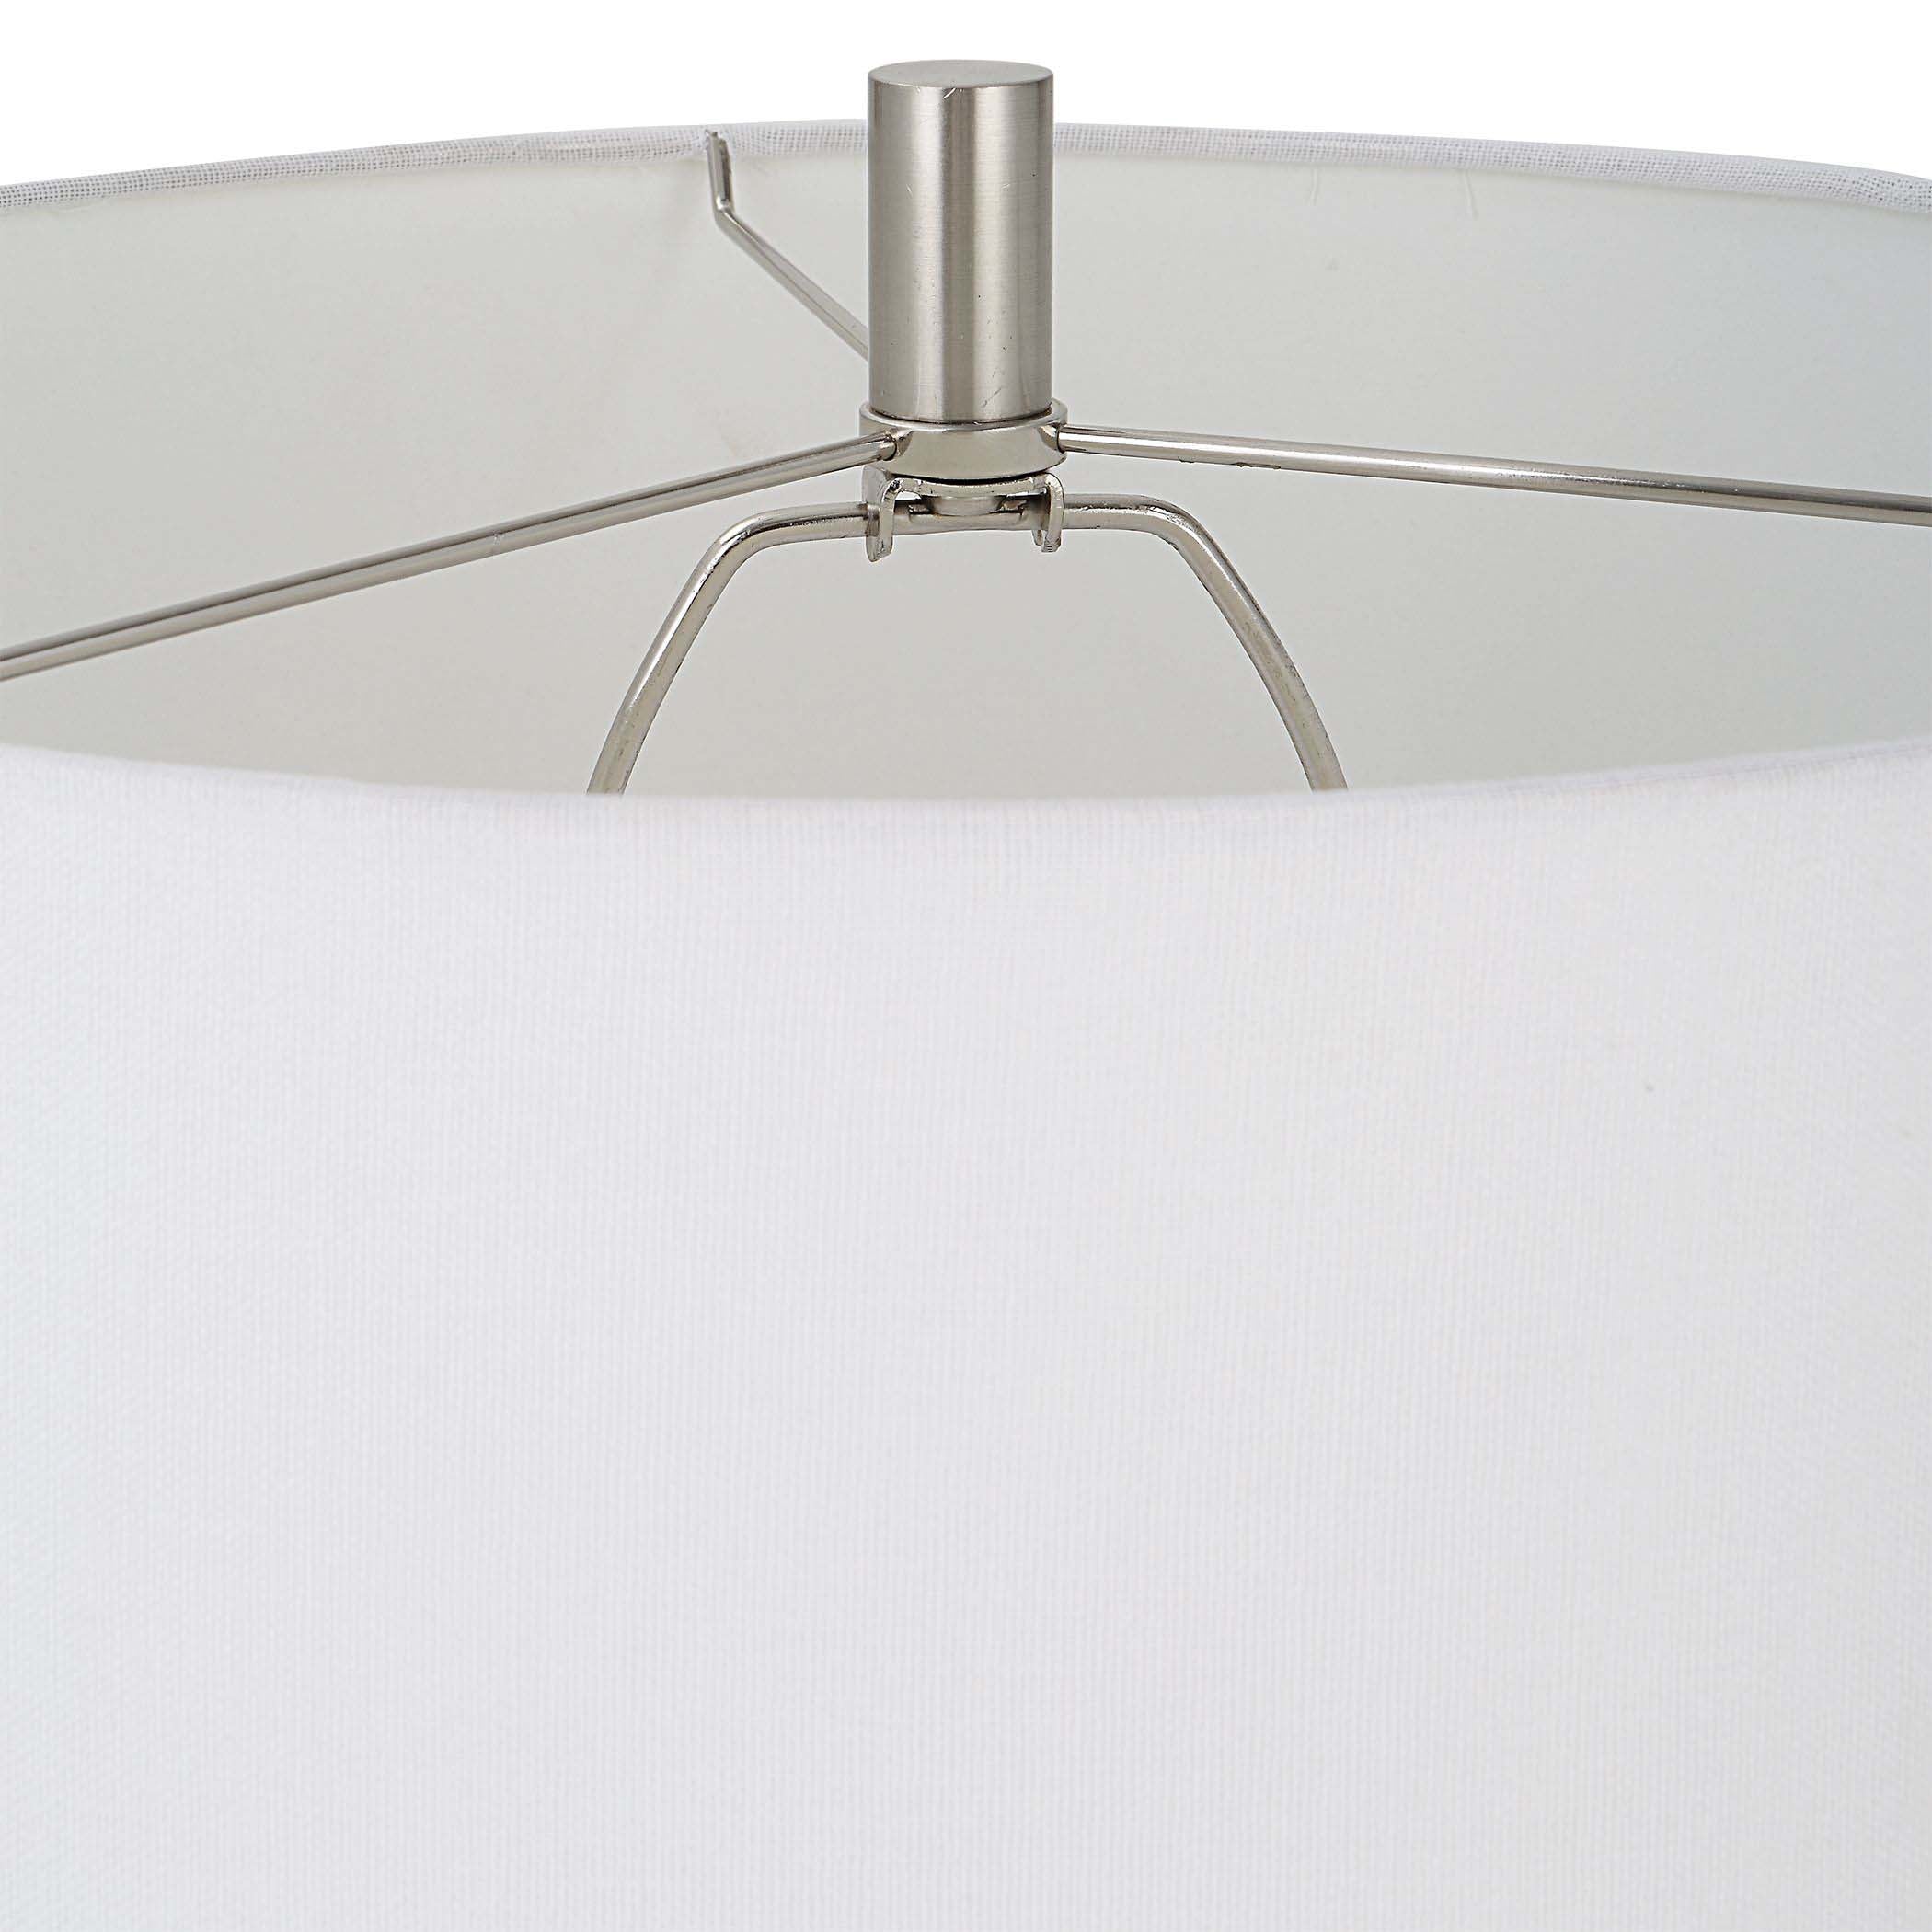 Decor Market White Ceramic Table Lamp